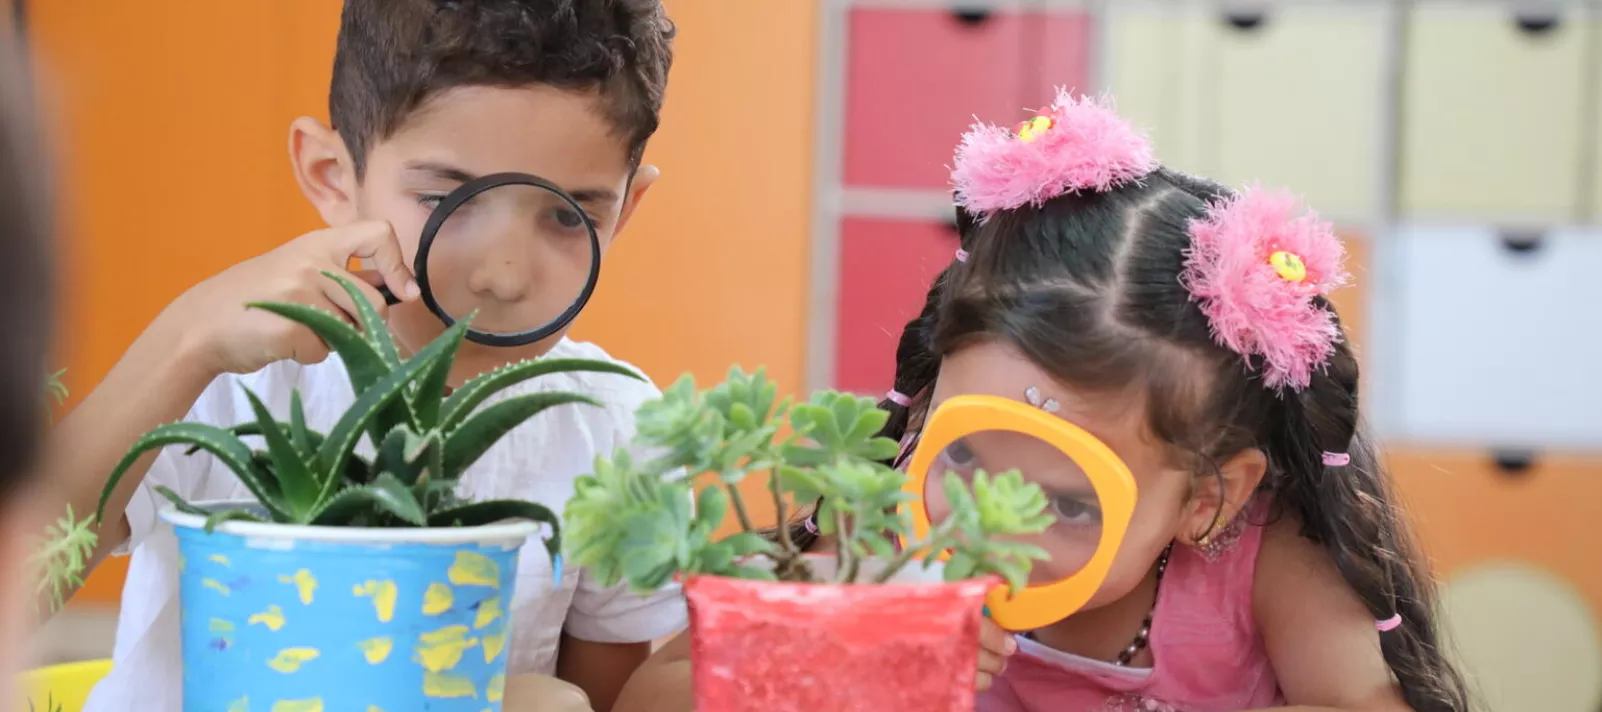 children observing plants